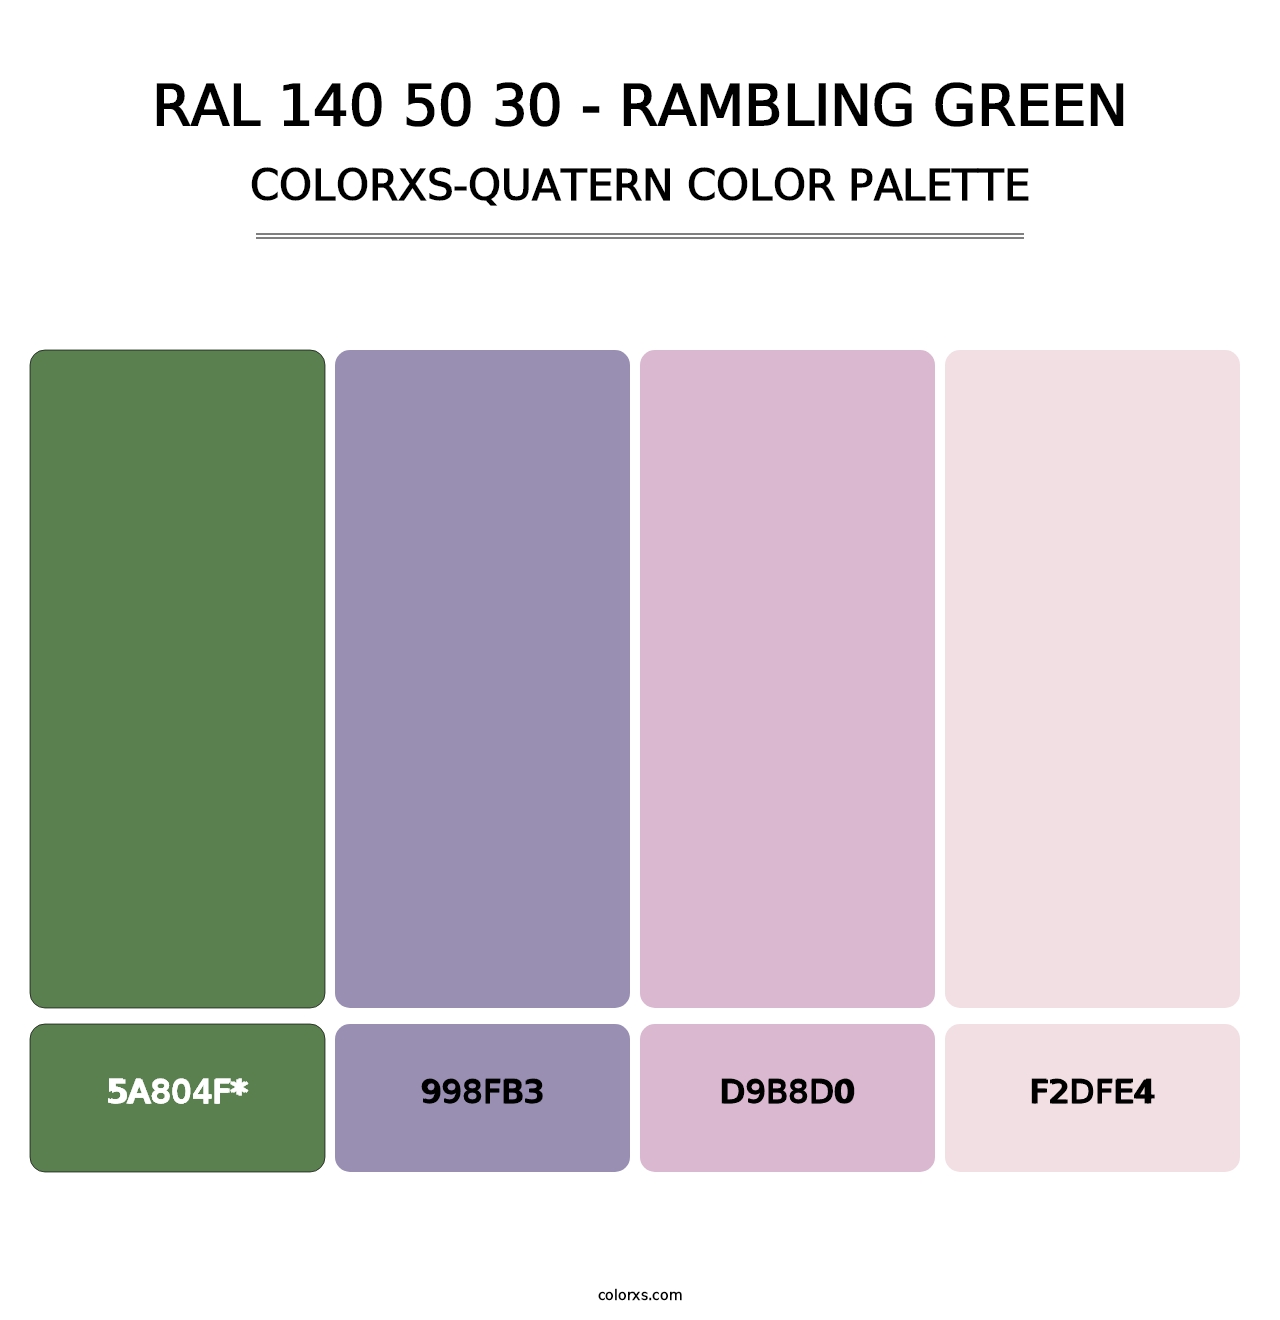 RAL 140 50 30 - Rambling Green - Colorxs Quatern Palette